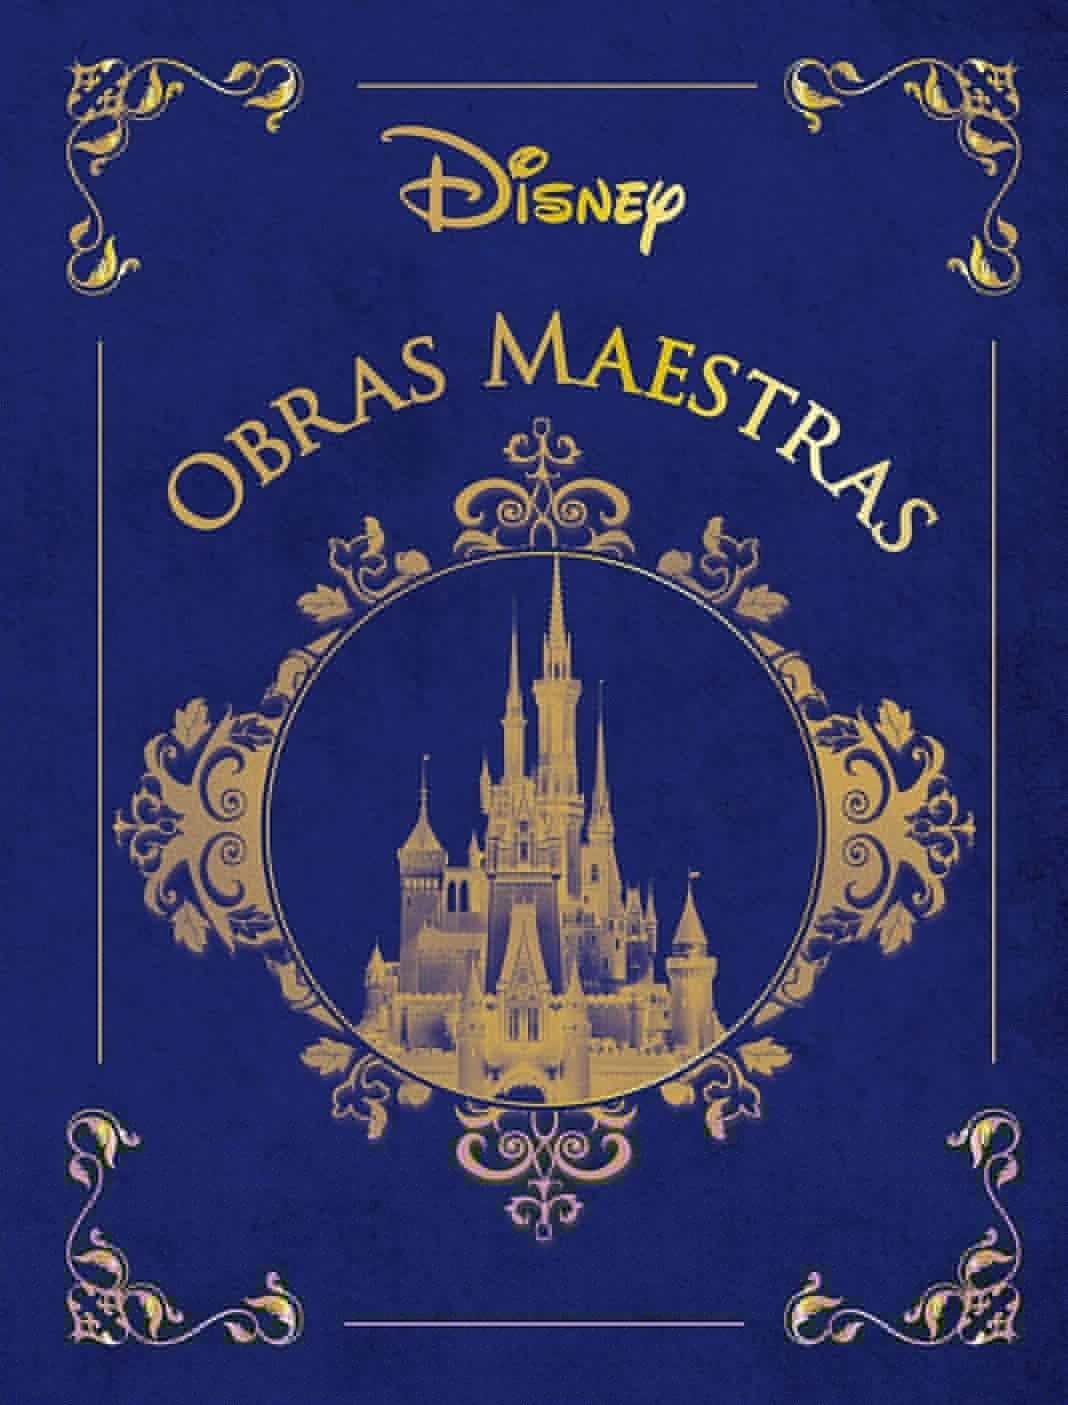 Obras Maestras de Disney